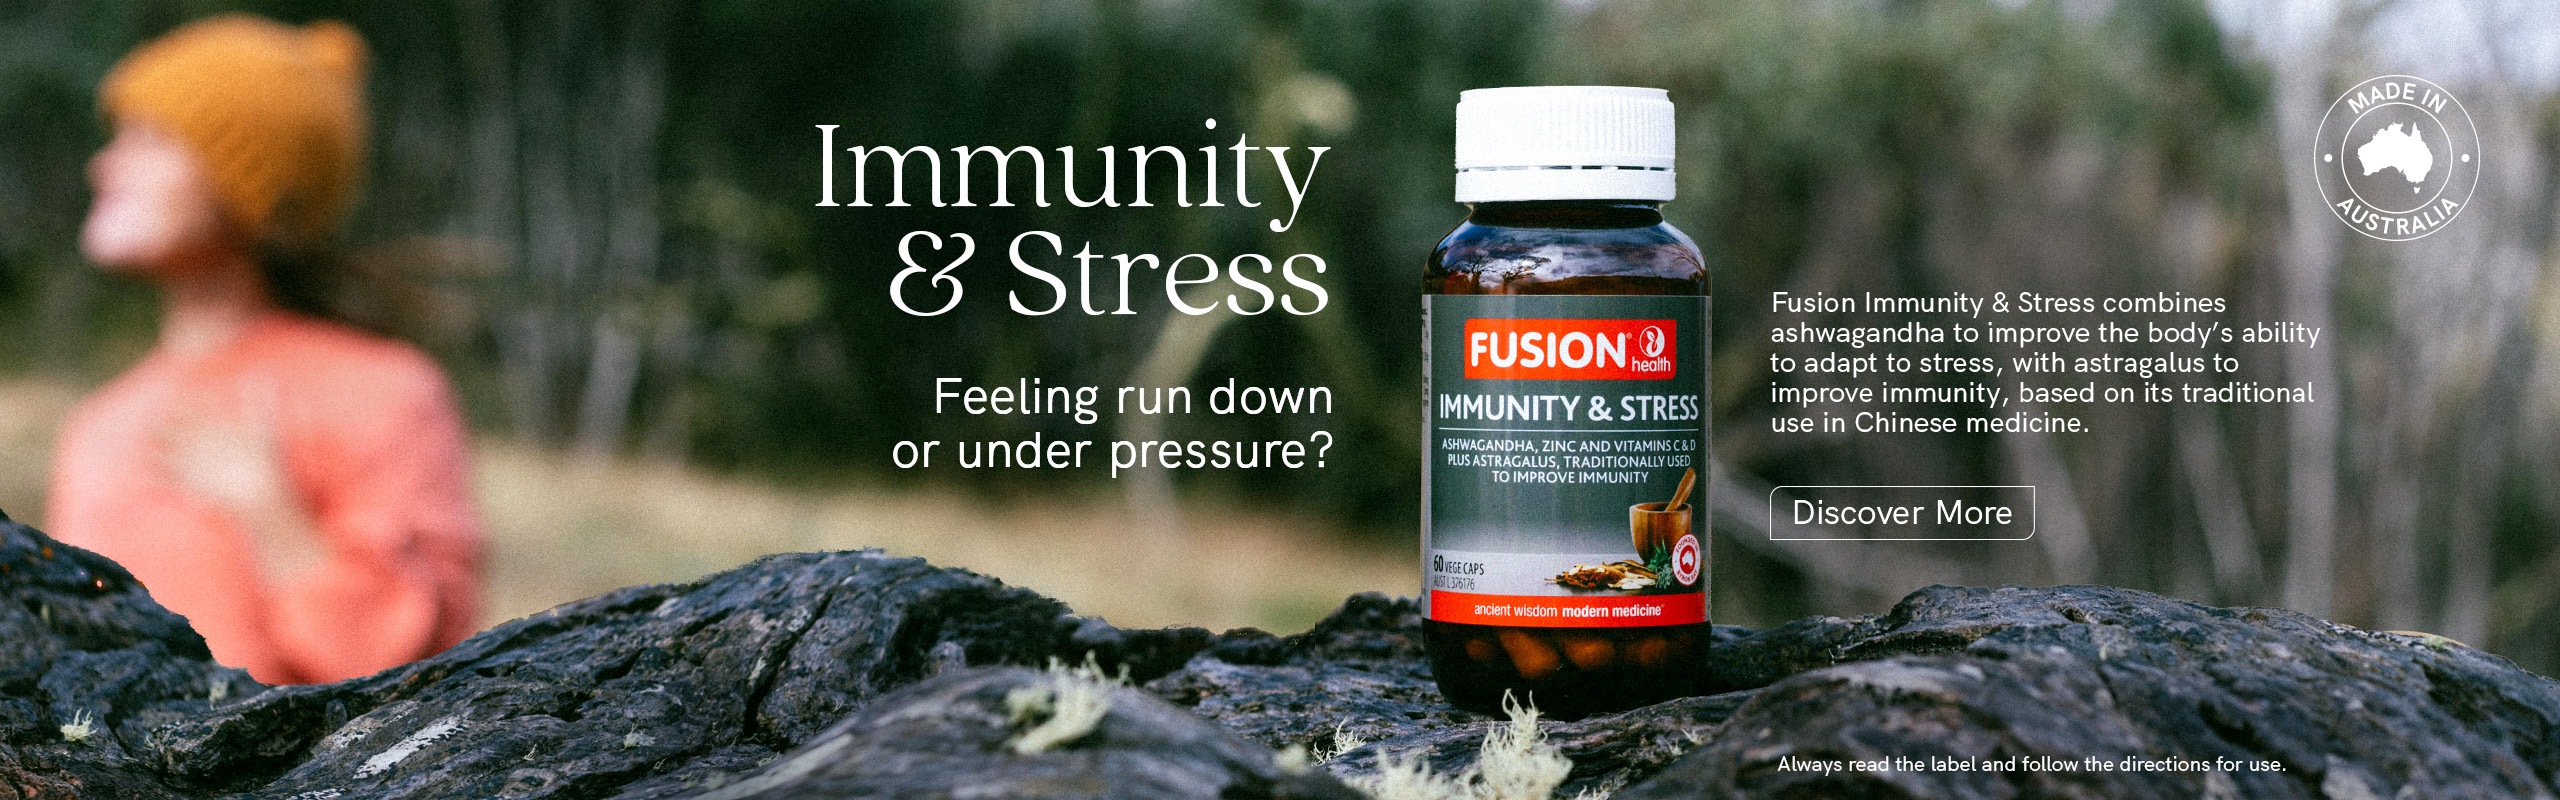 Fusion Immunity & Stress